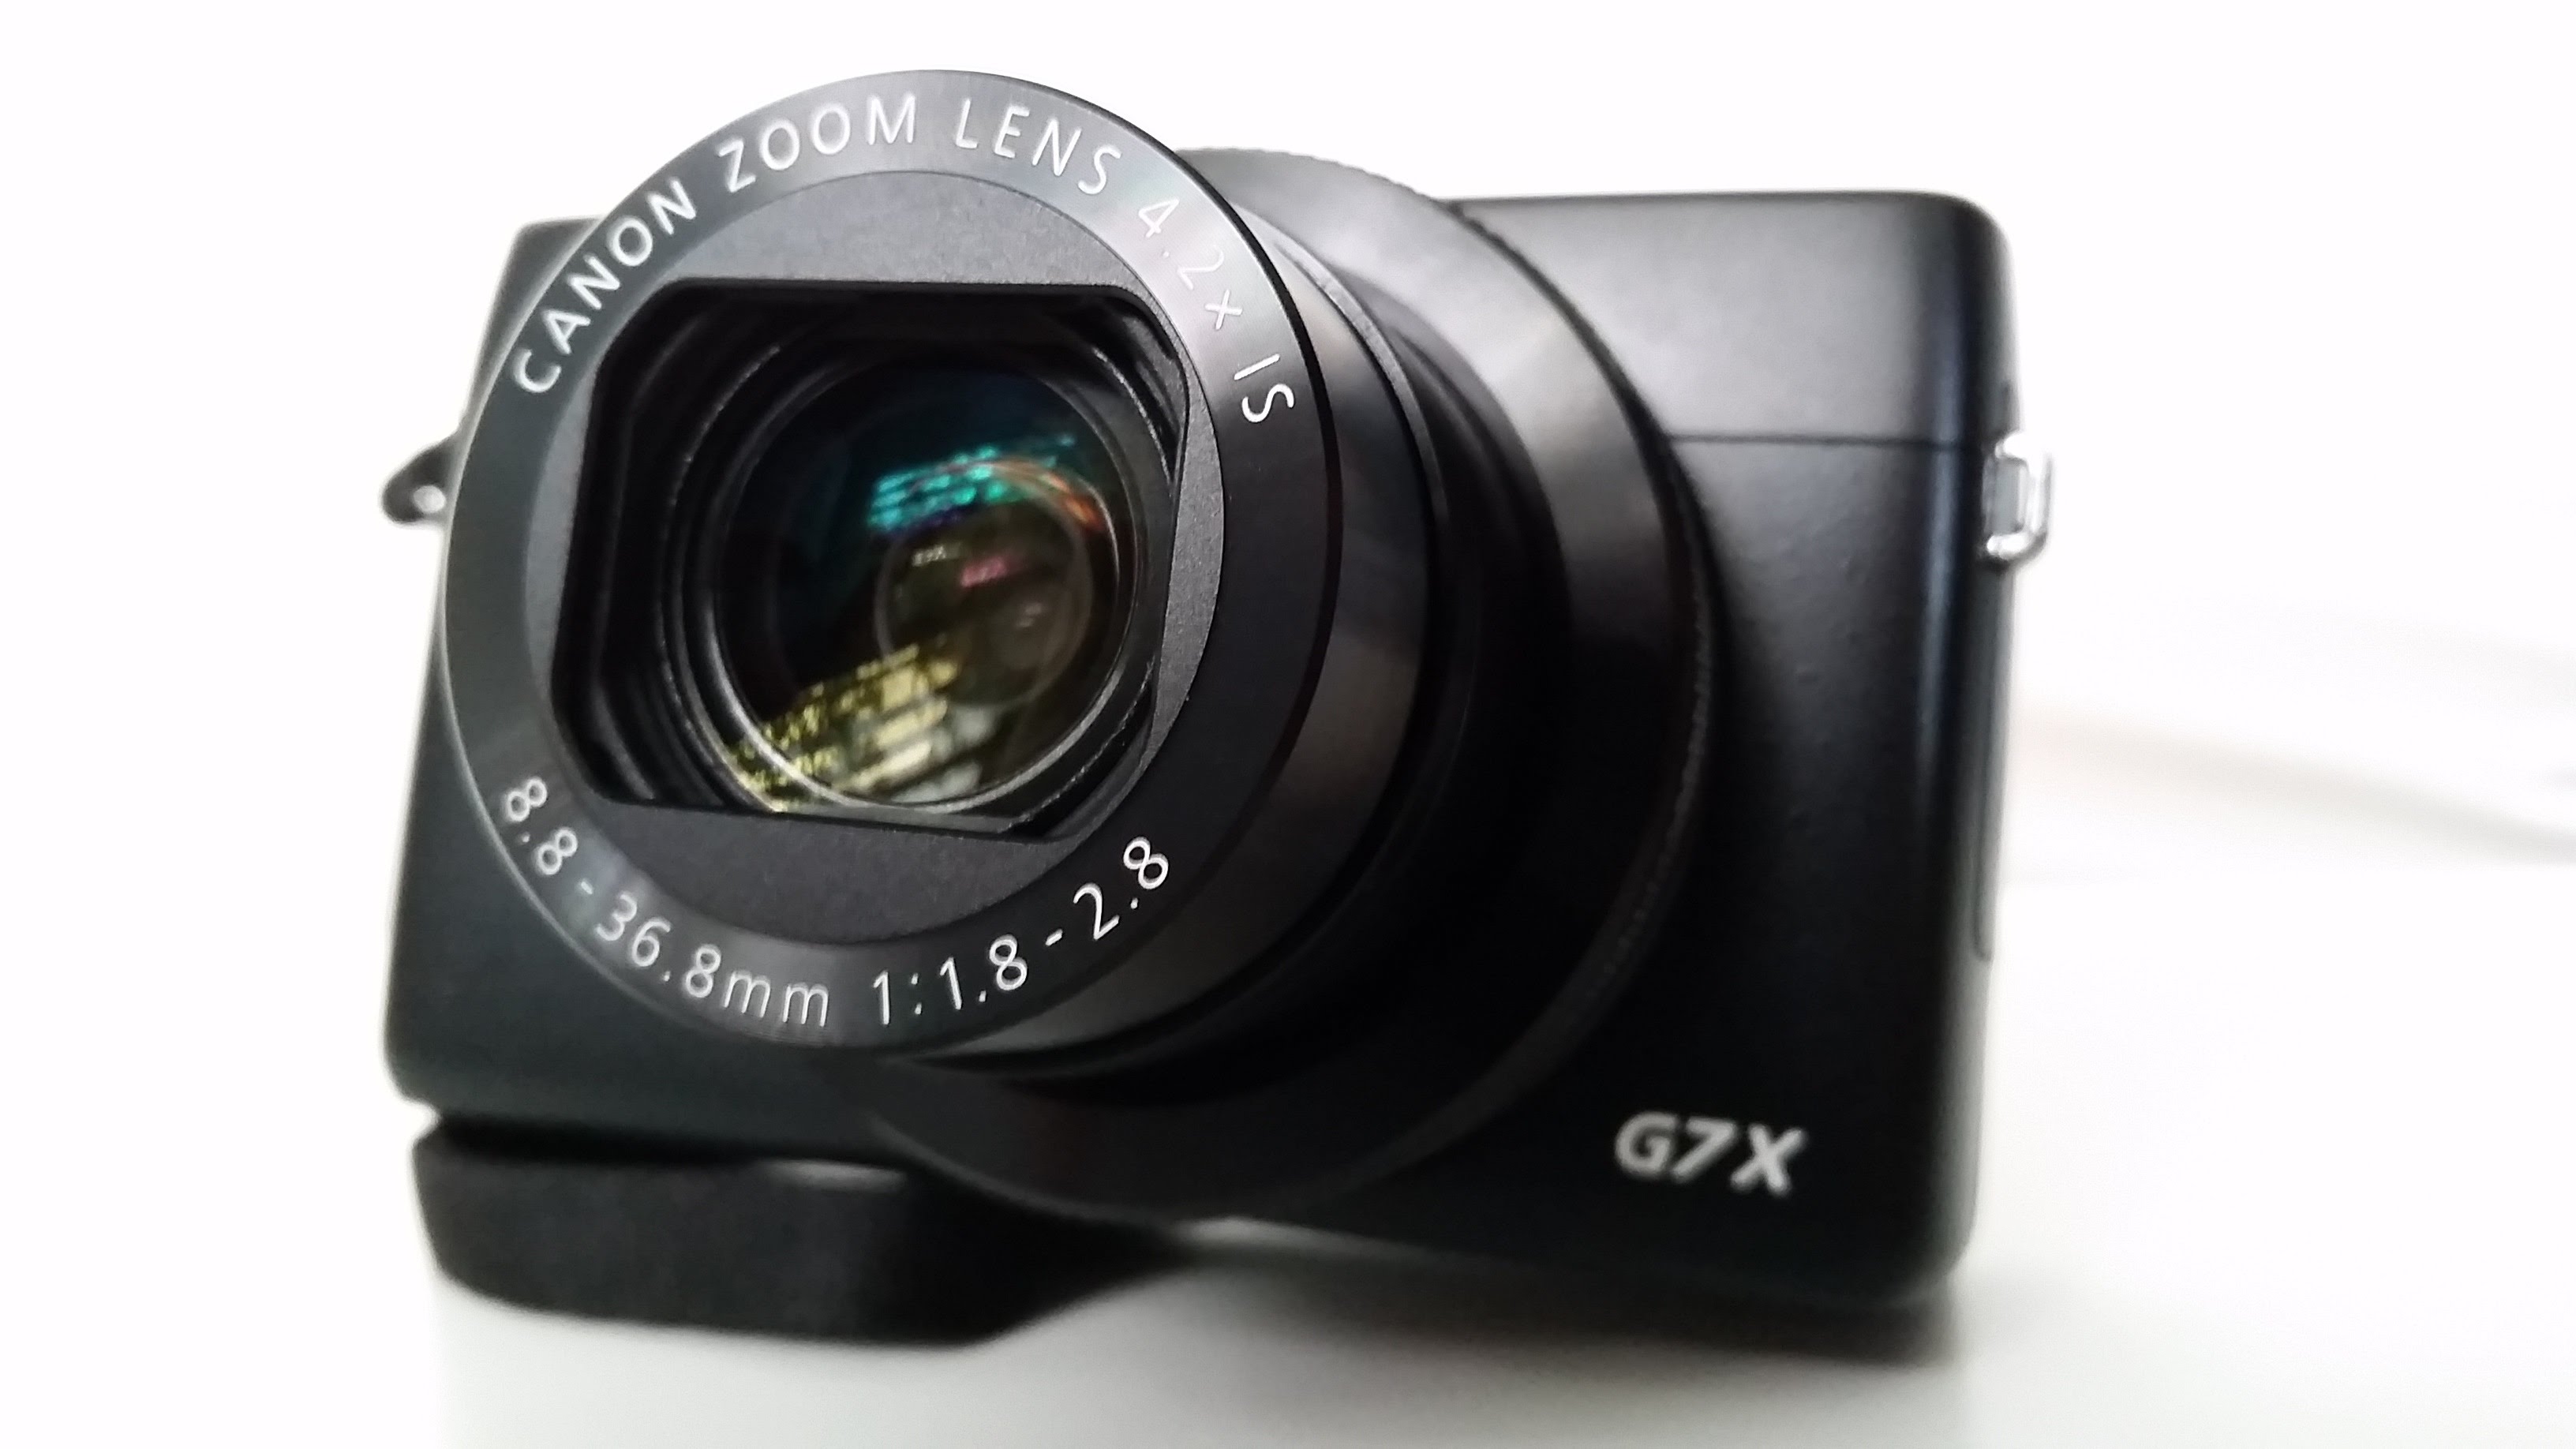 My New Canon G7X Camera!